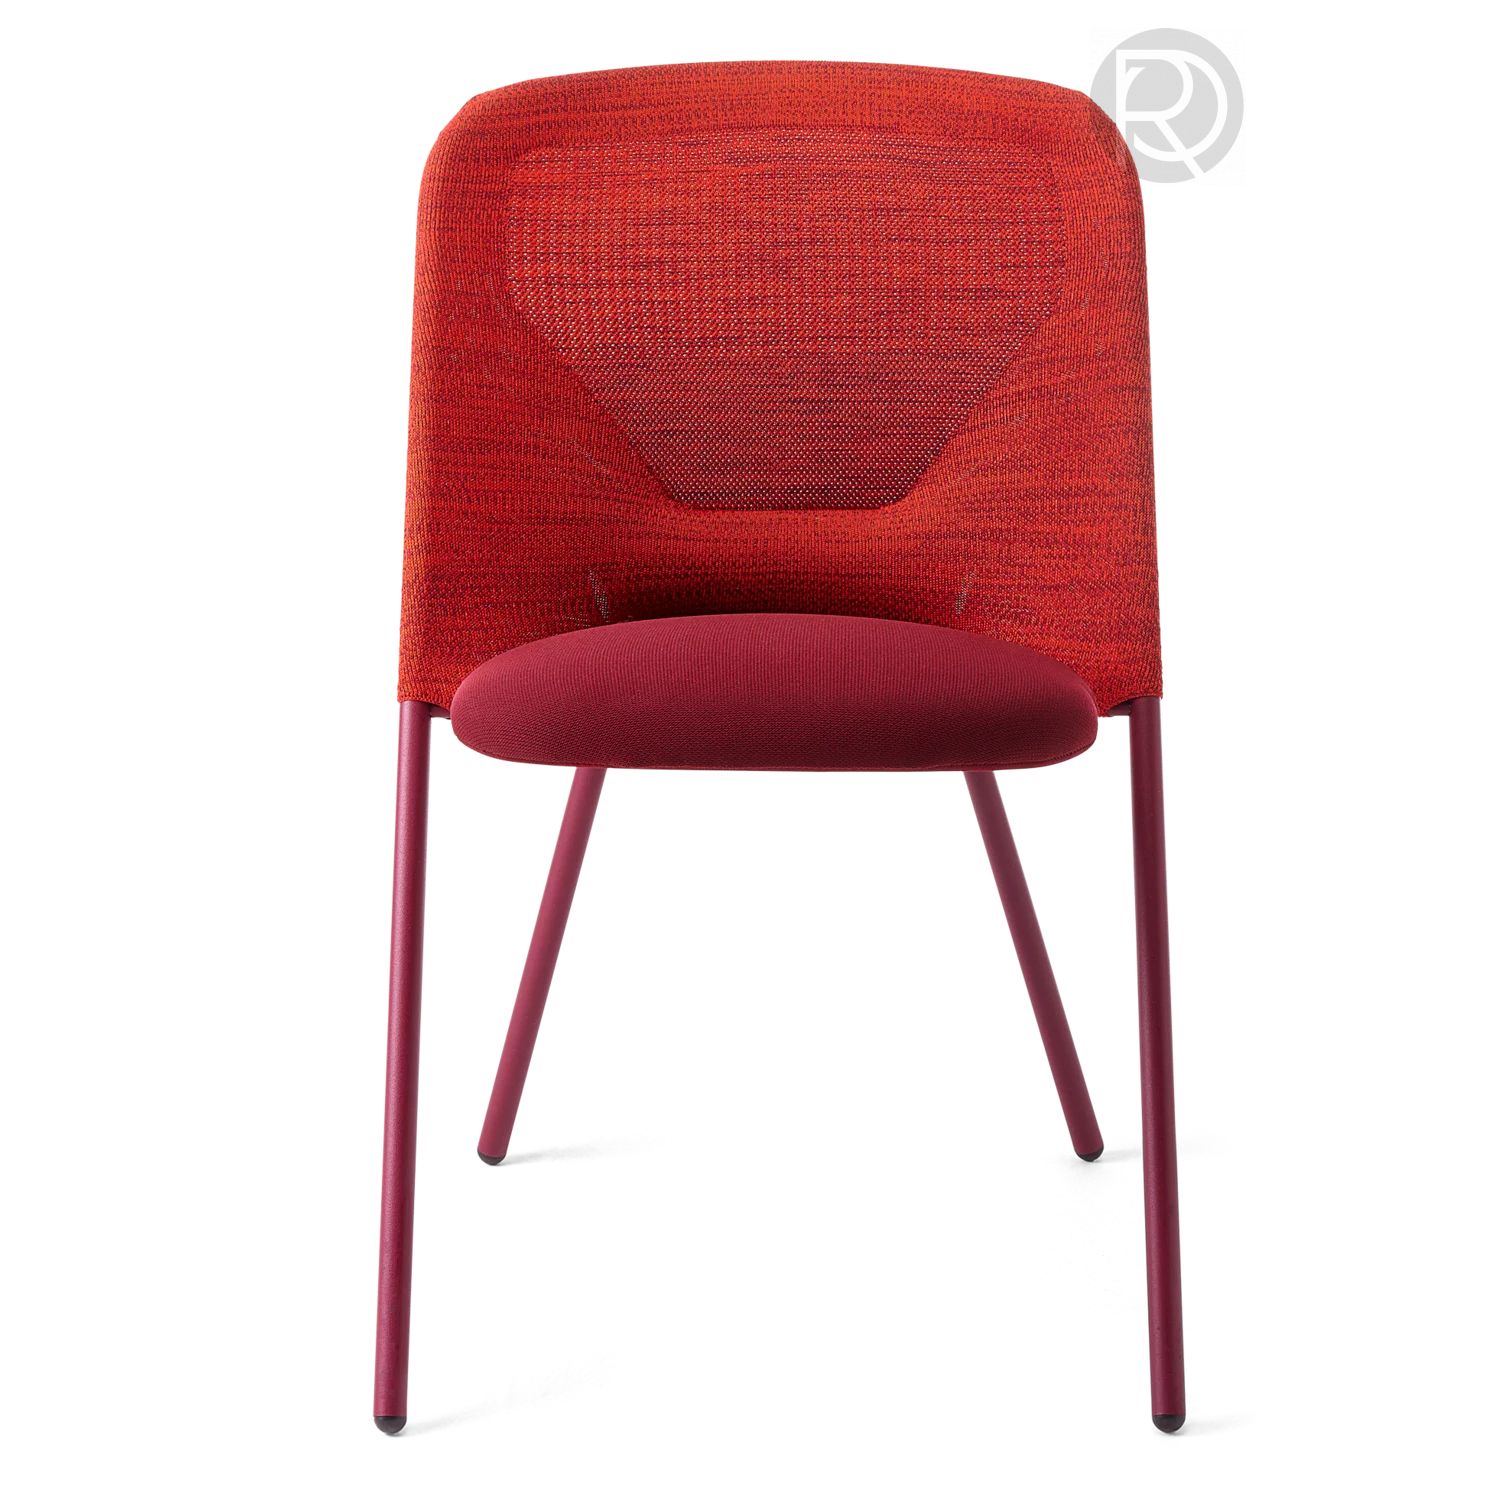 Chair SHIFT by Moooi